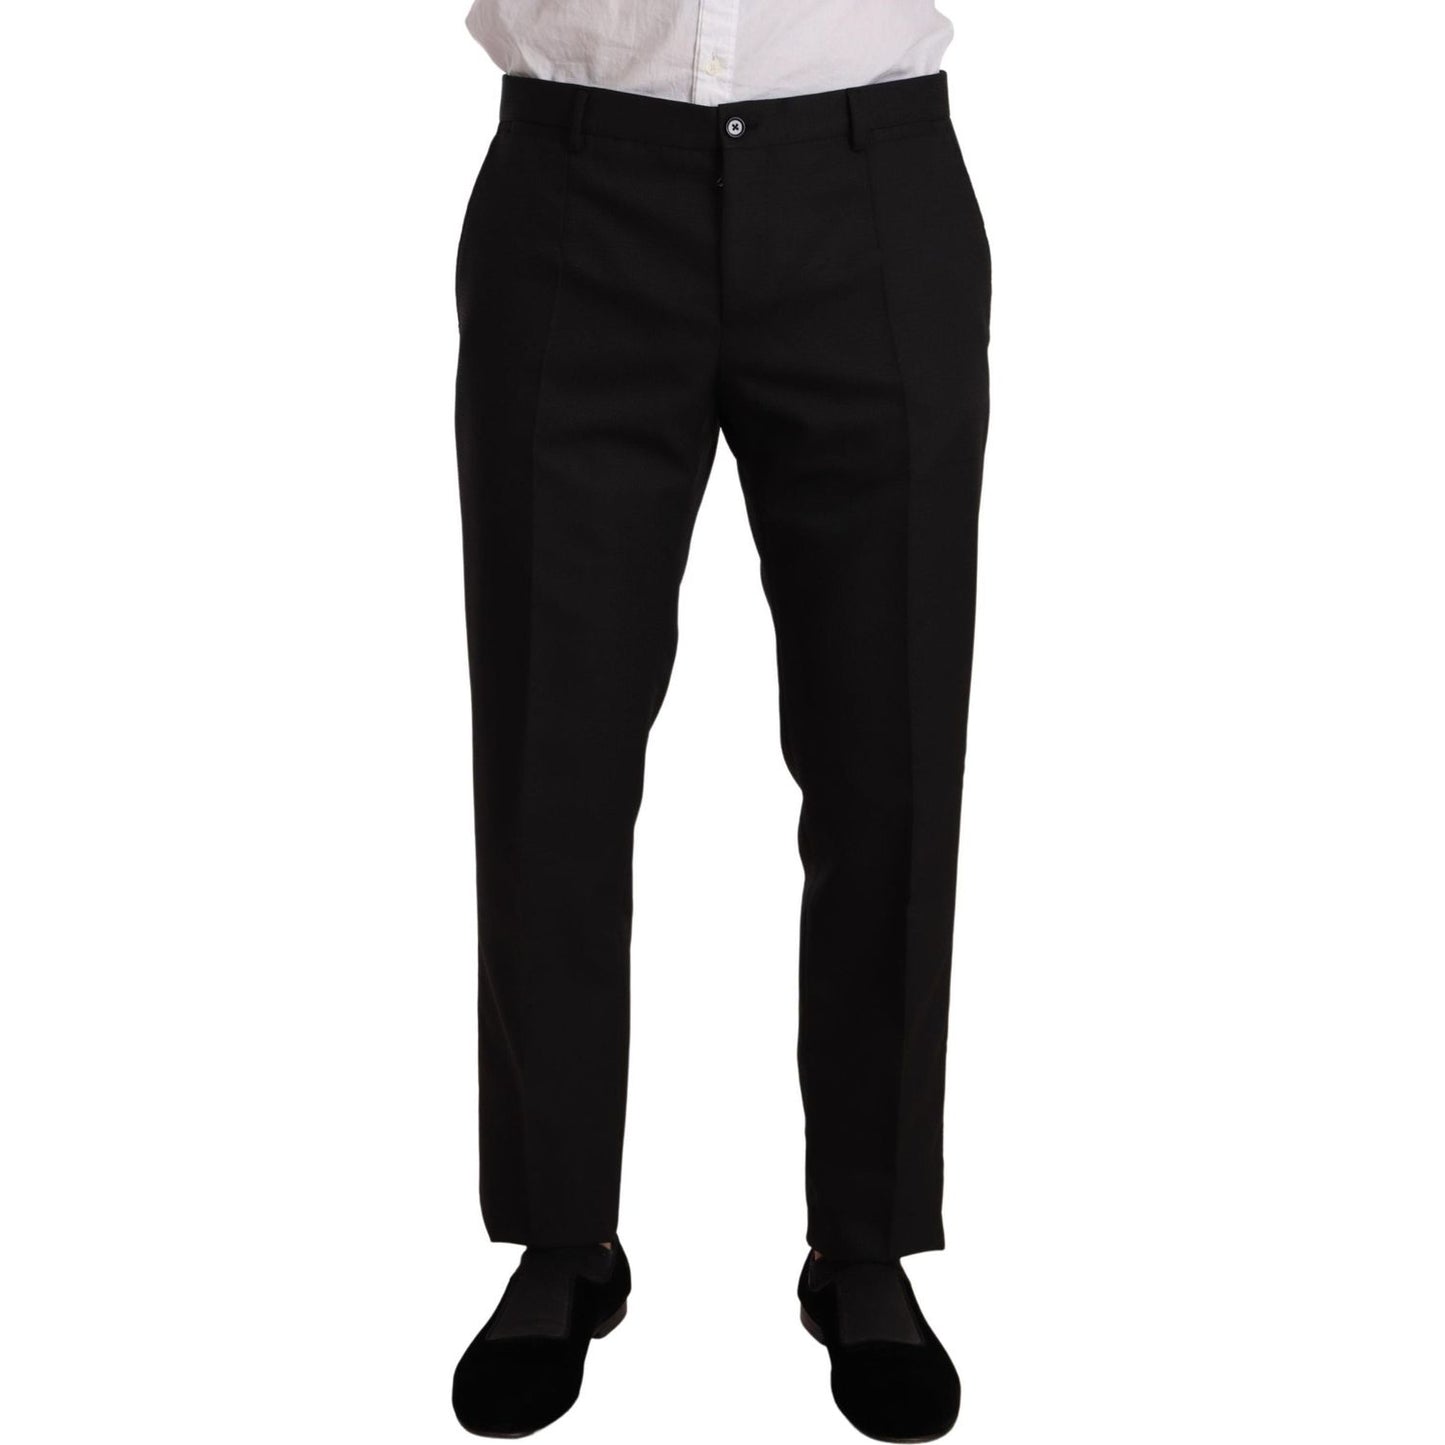 Dolce & Gabbana Elegant Martini Slim Fit Two-Piece Suit Suit black-fantasy-slim-fit-wool-martini-suit